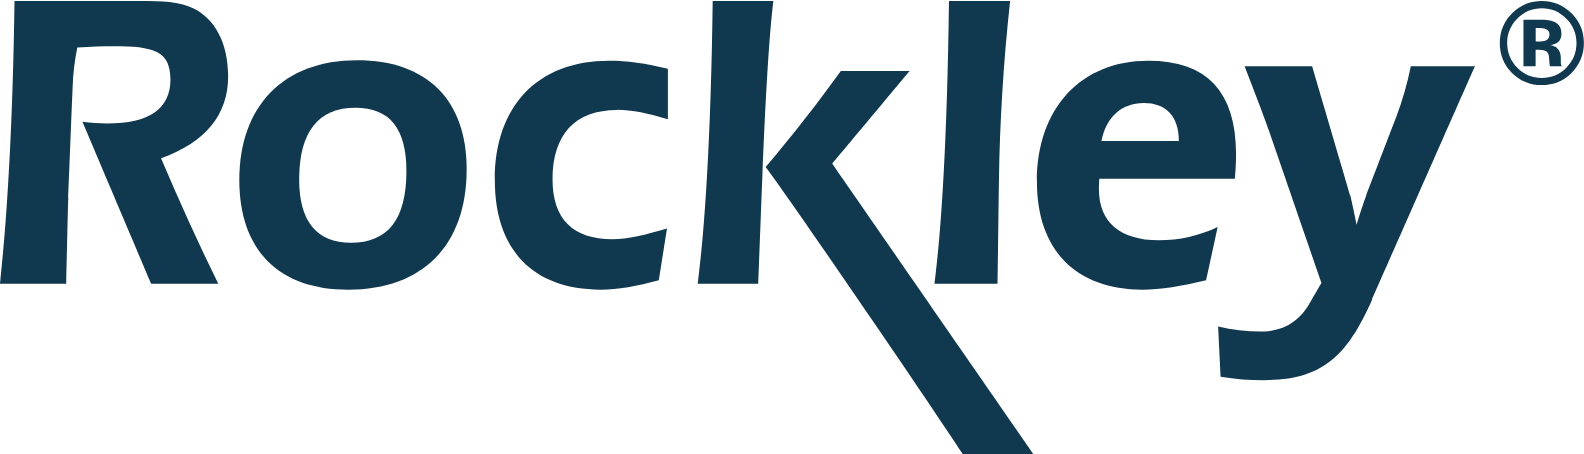 Rockley Photonics logo large (transparent PNG)